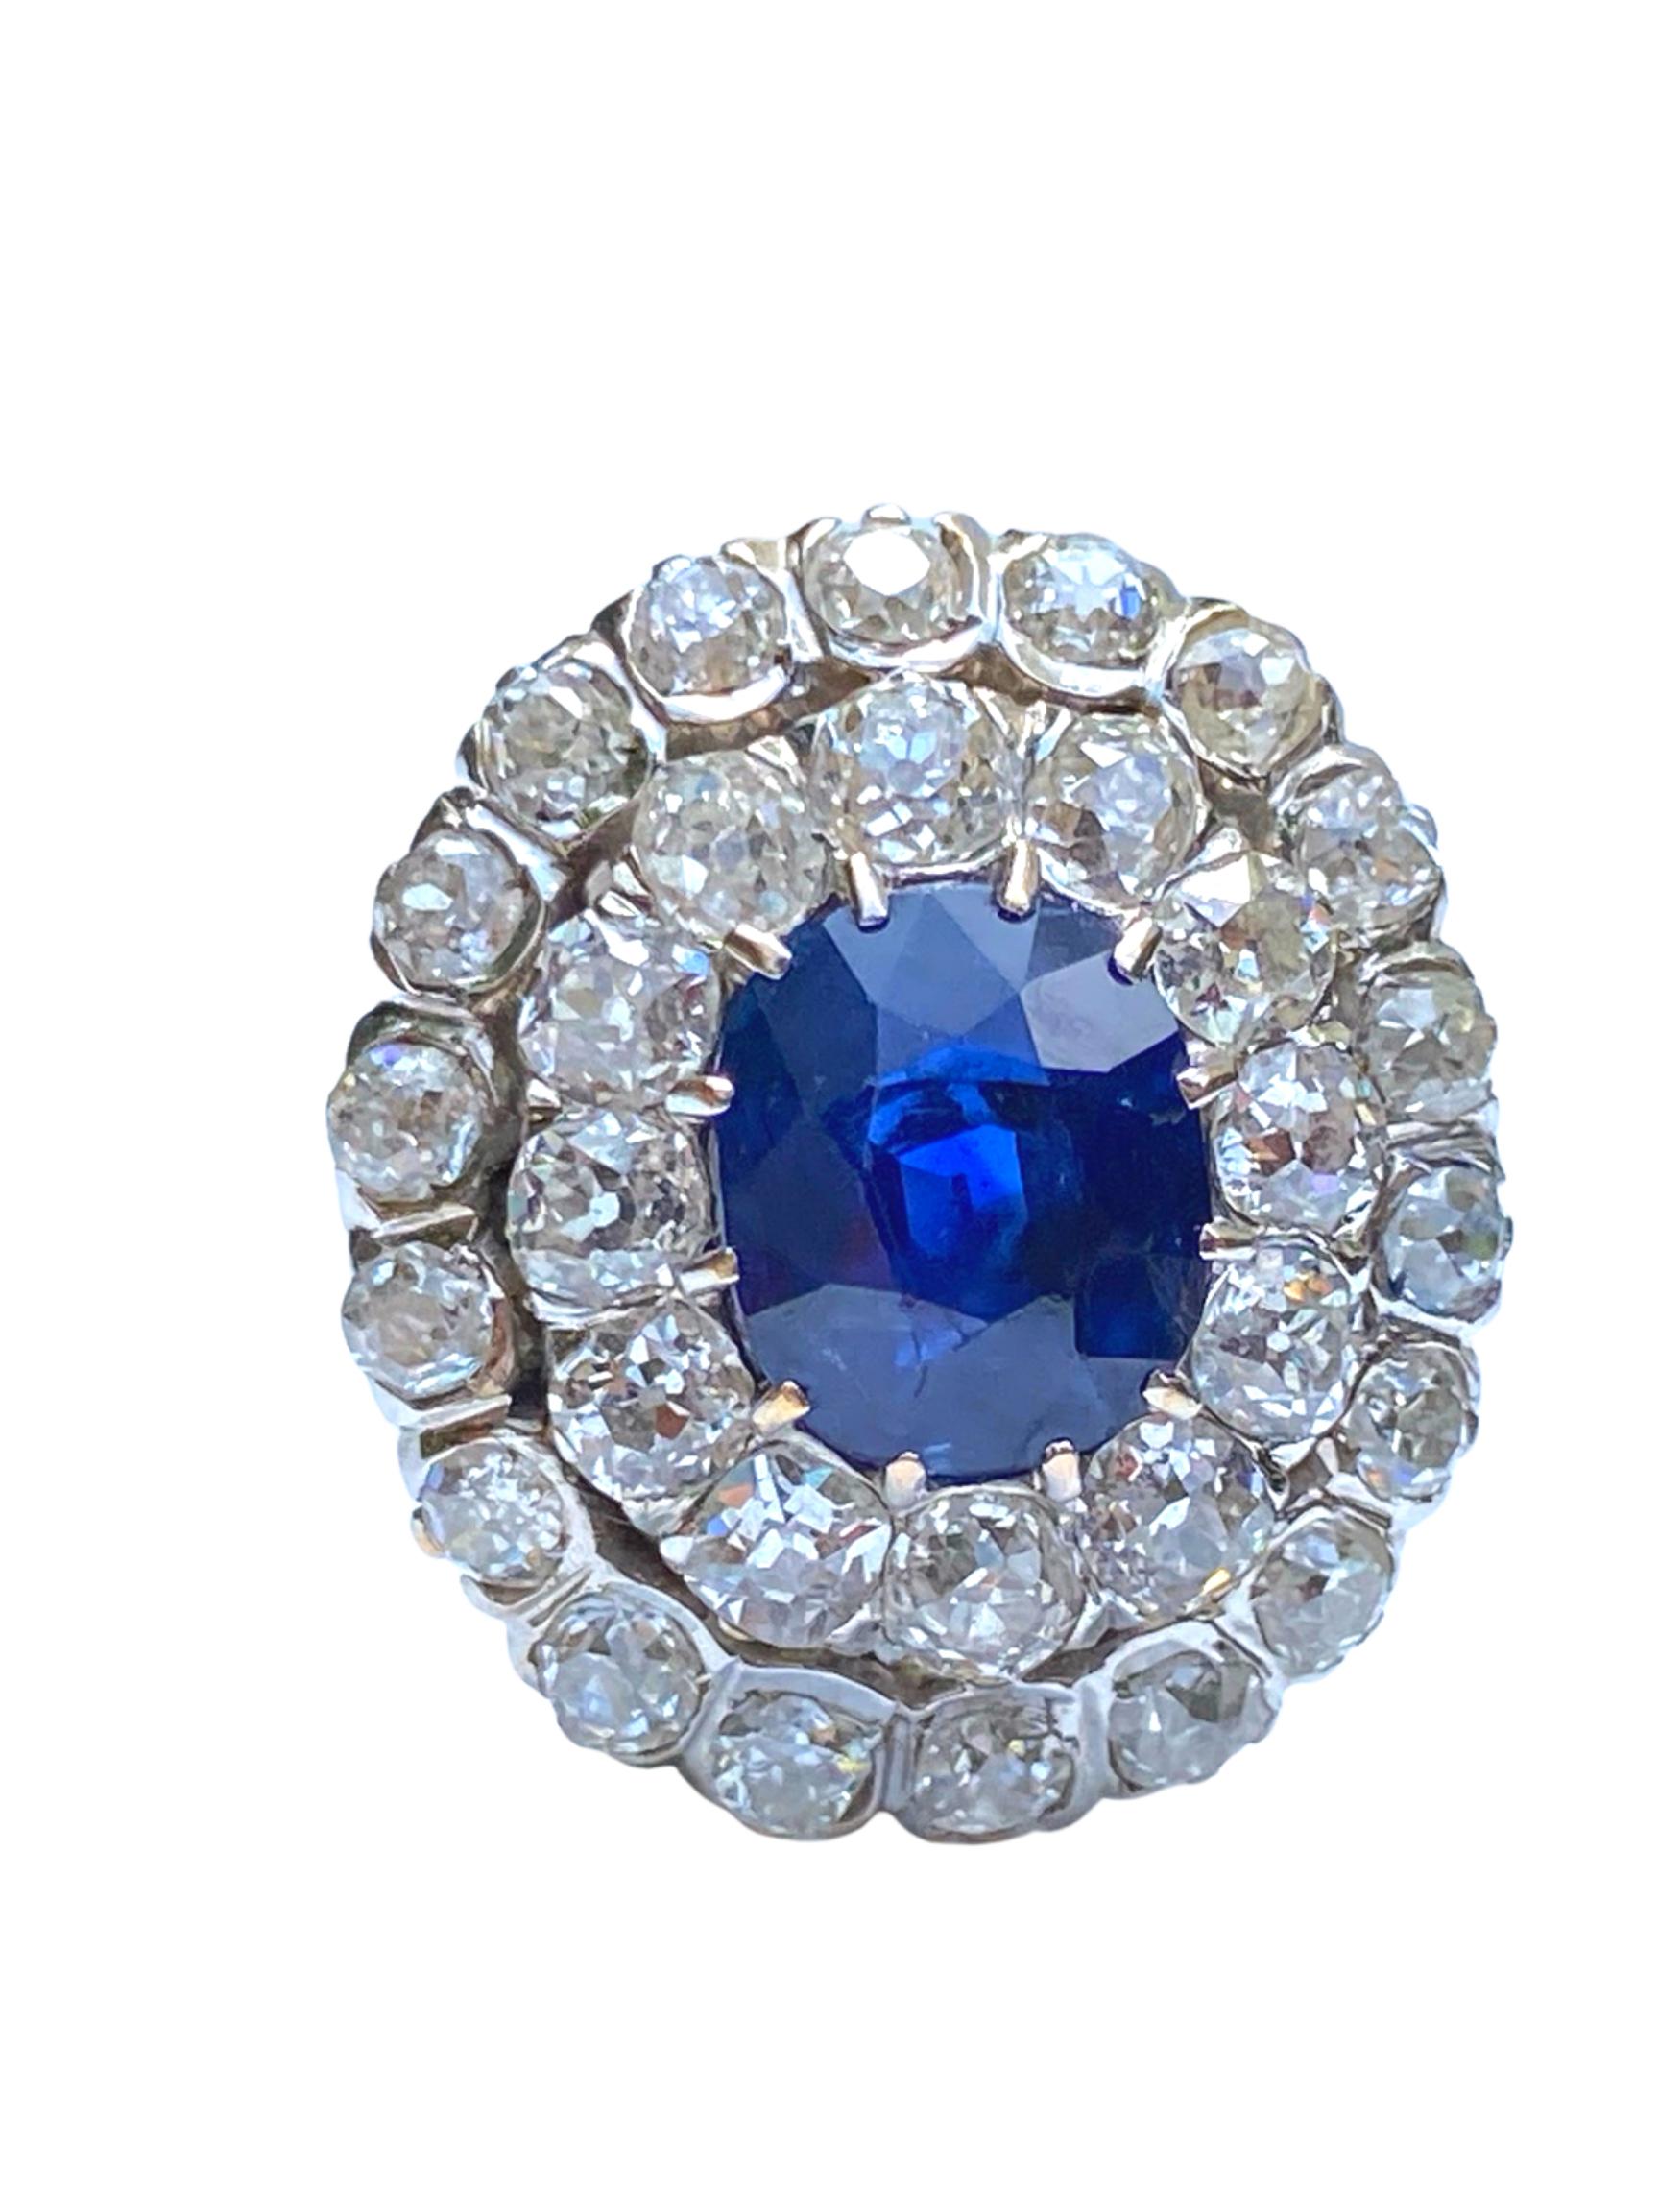 2.50 Carat Oval Cut Burma Sapphire and Diamond Victorian Era Platinum Ring For Sale 3